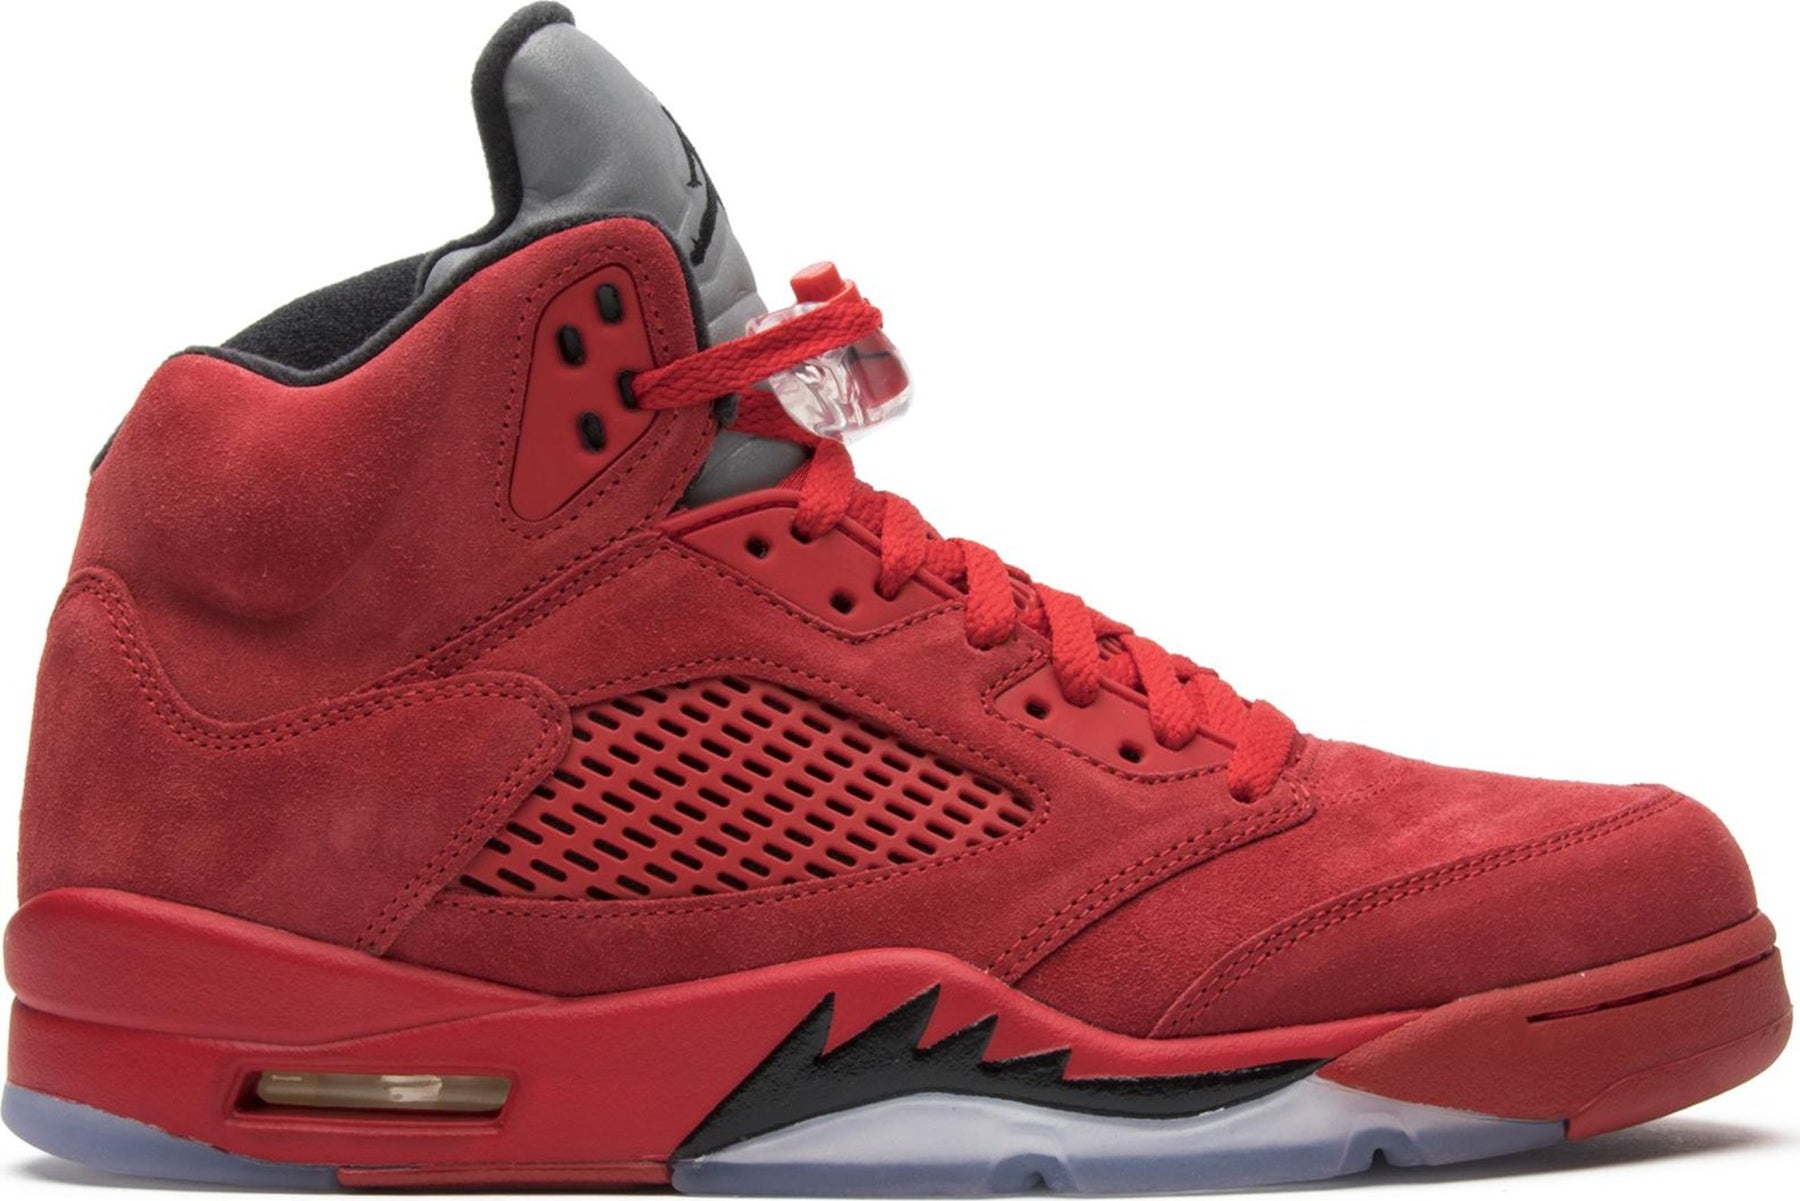 Air Jordan 5 Retro "Red Suede" (PreOwned)